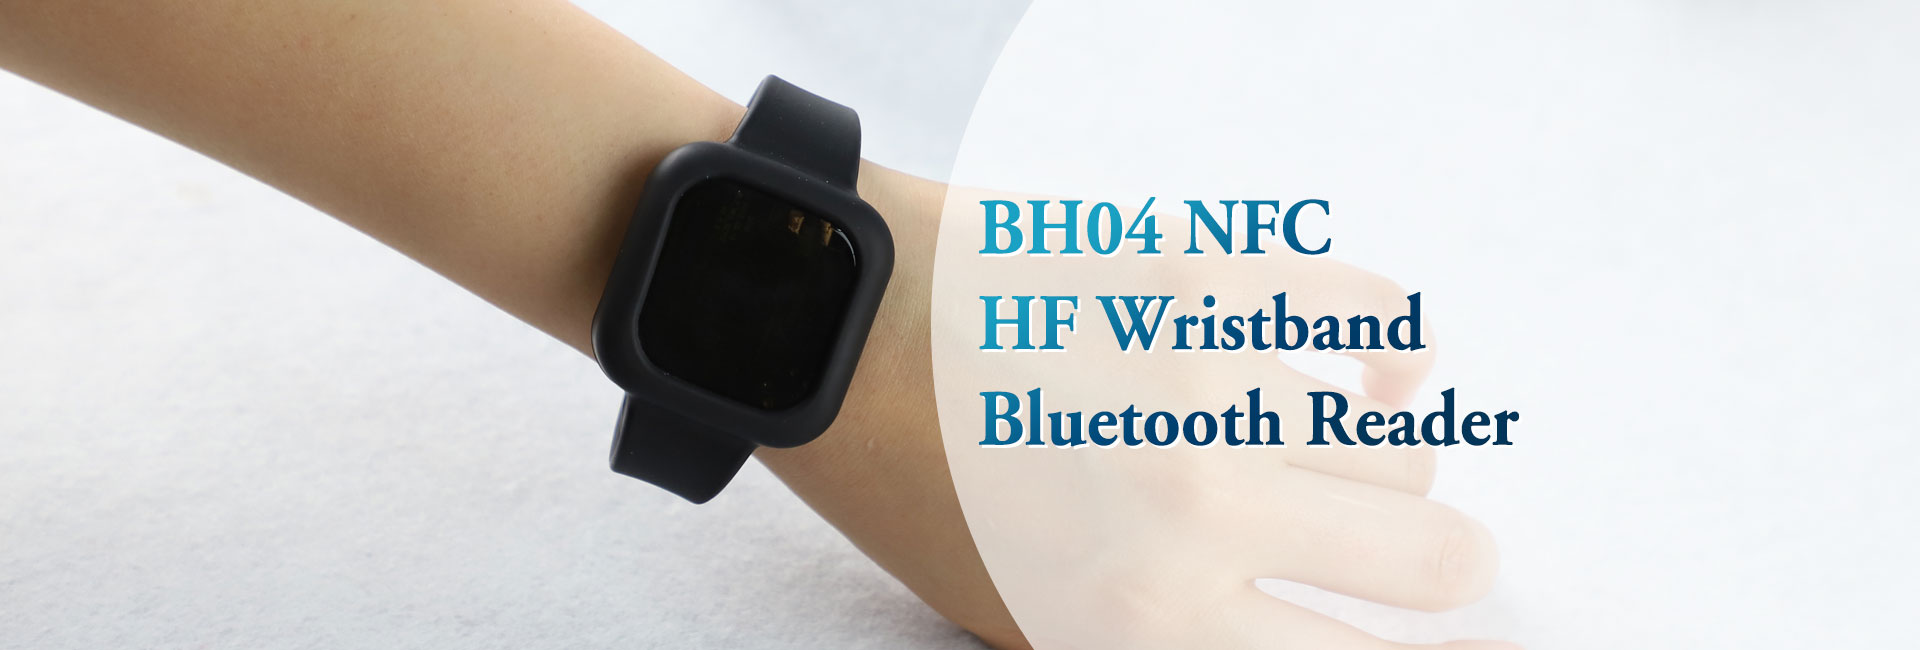 BH04 NFC高频腕带Bluetooth Reader